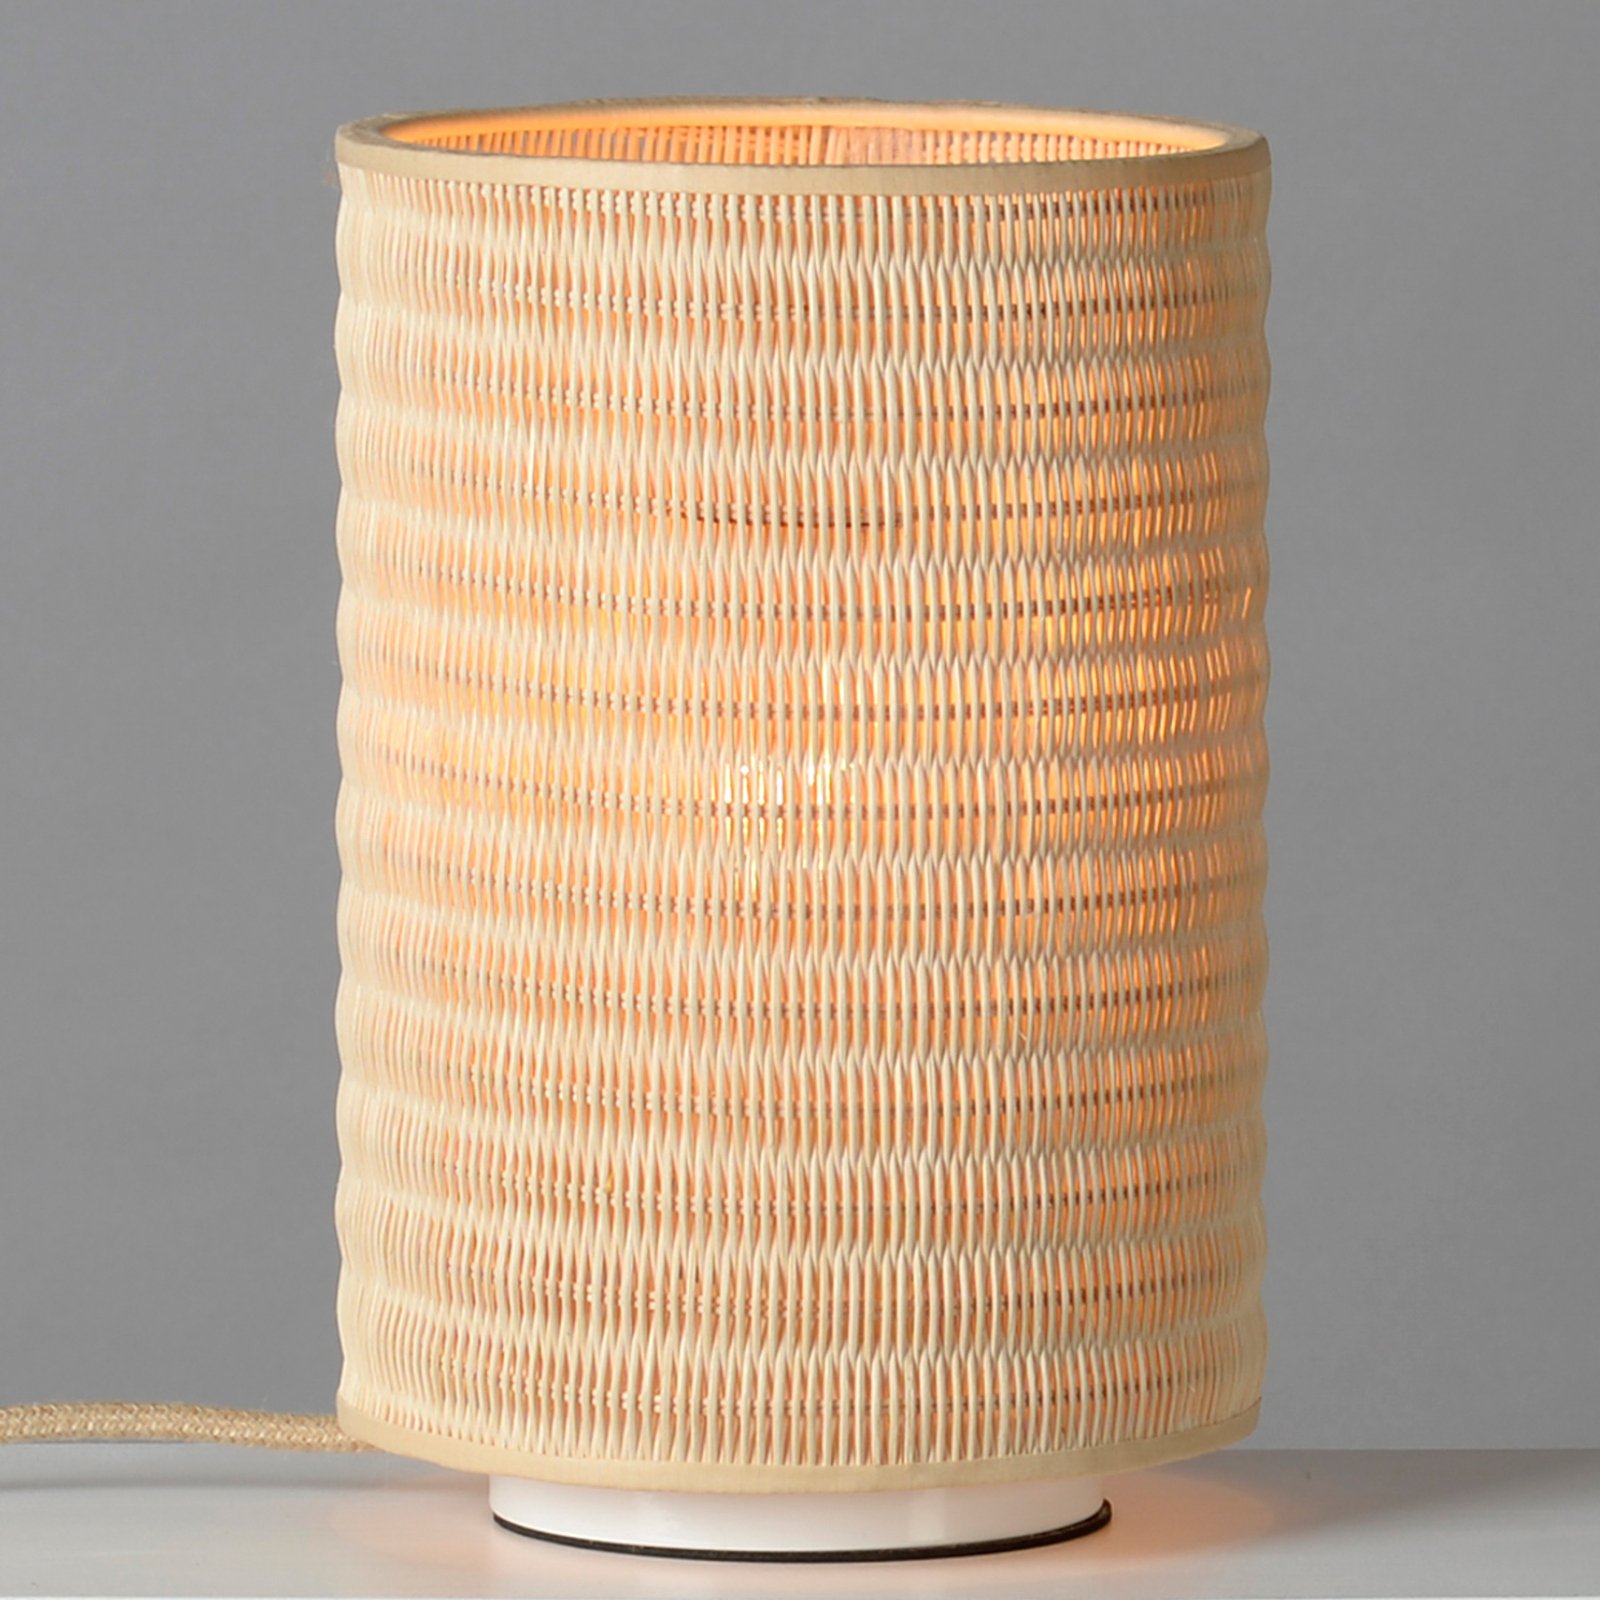 Vlechtwerk table lamp, cylinder, made of rattan